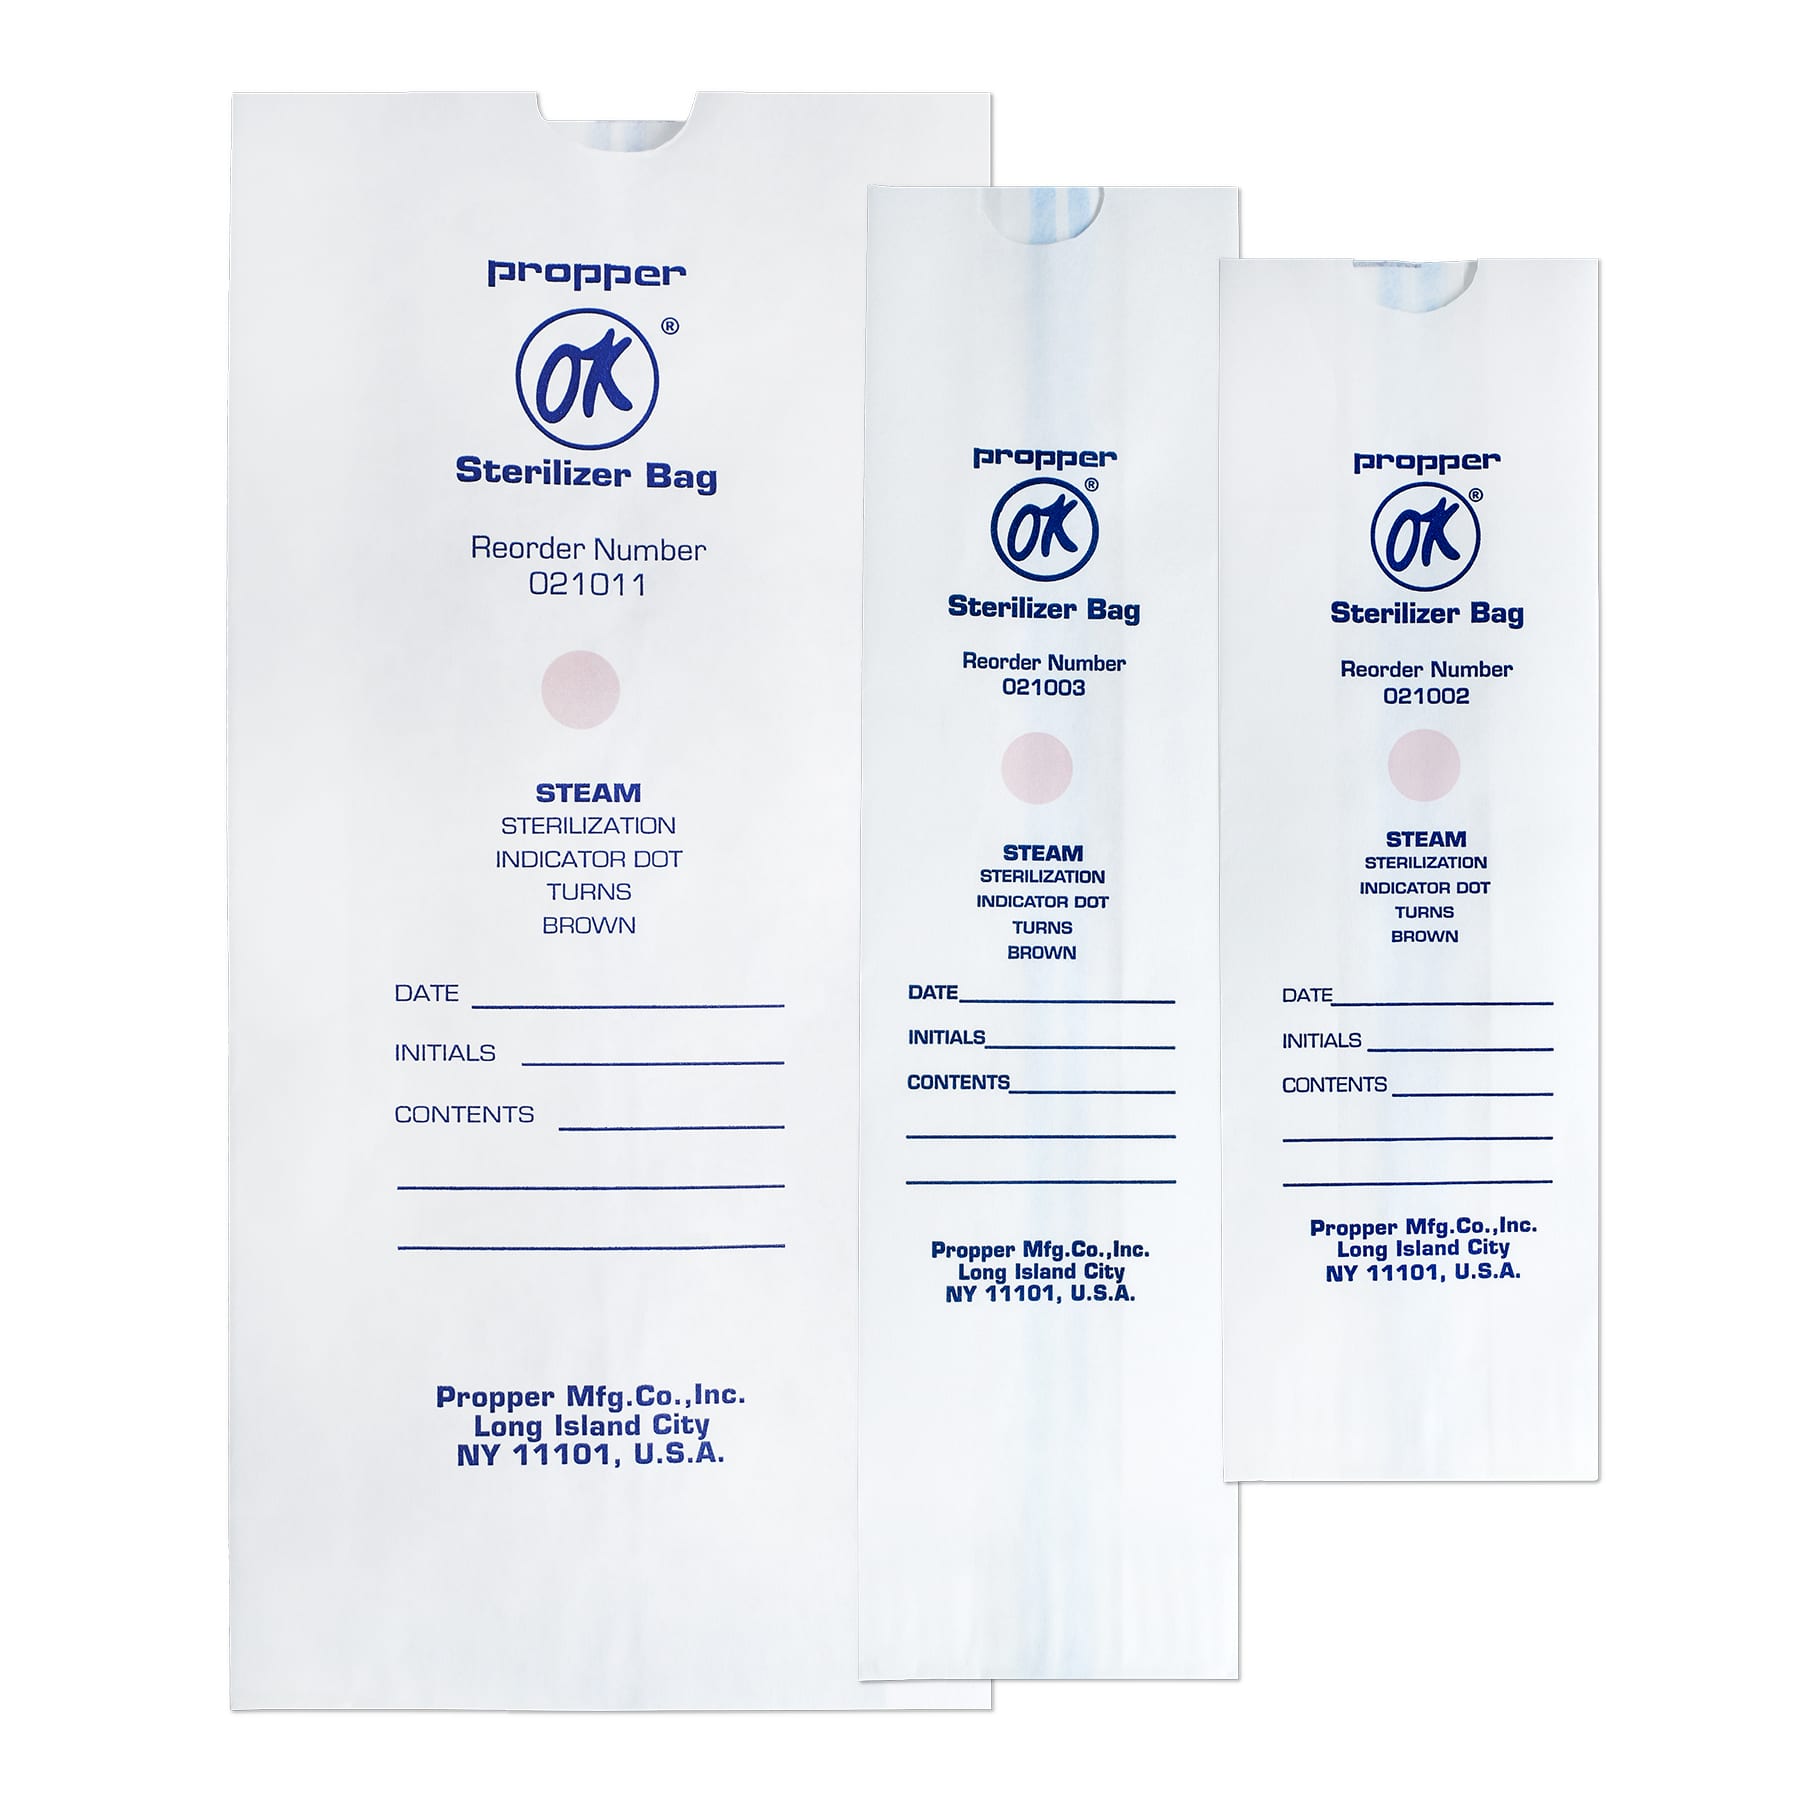 OK Sterilizer Bags for Use in Steam Sterilizers